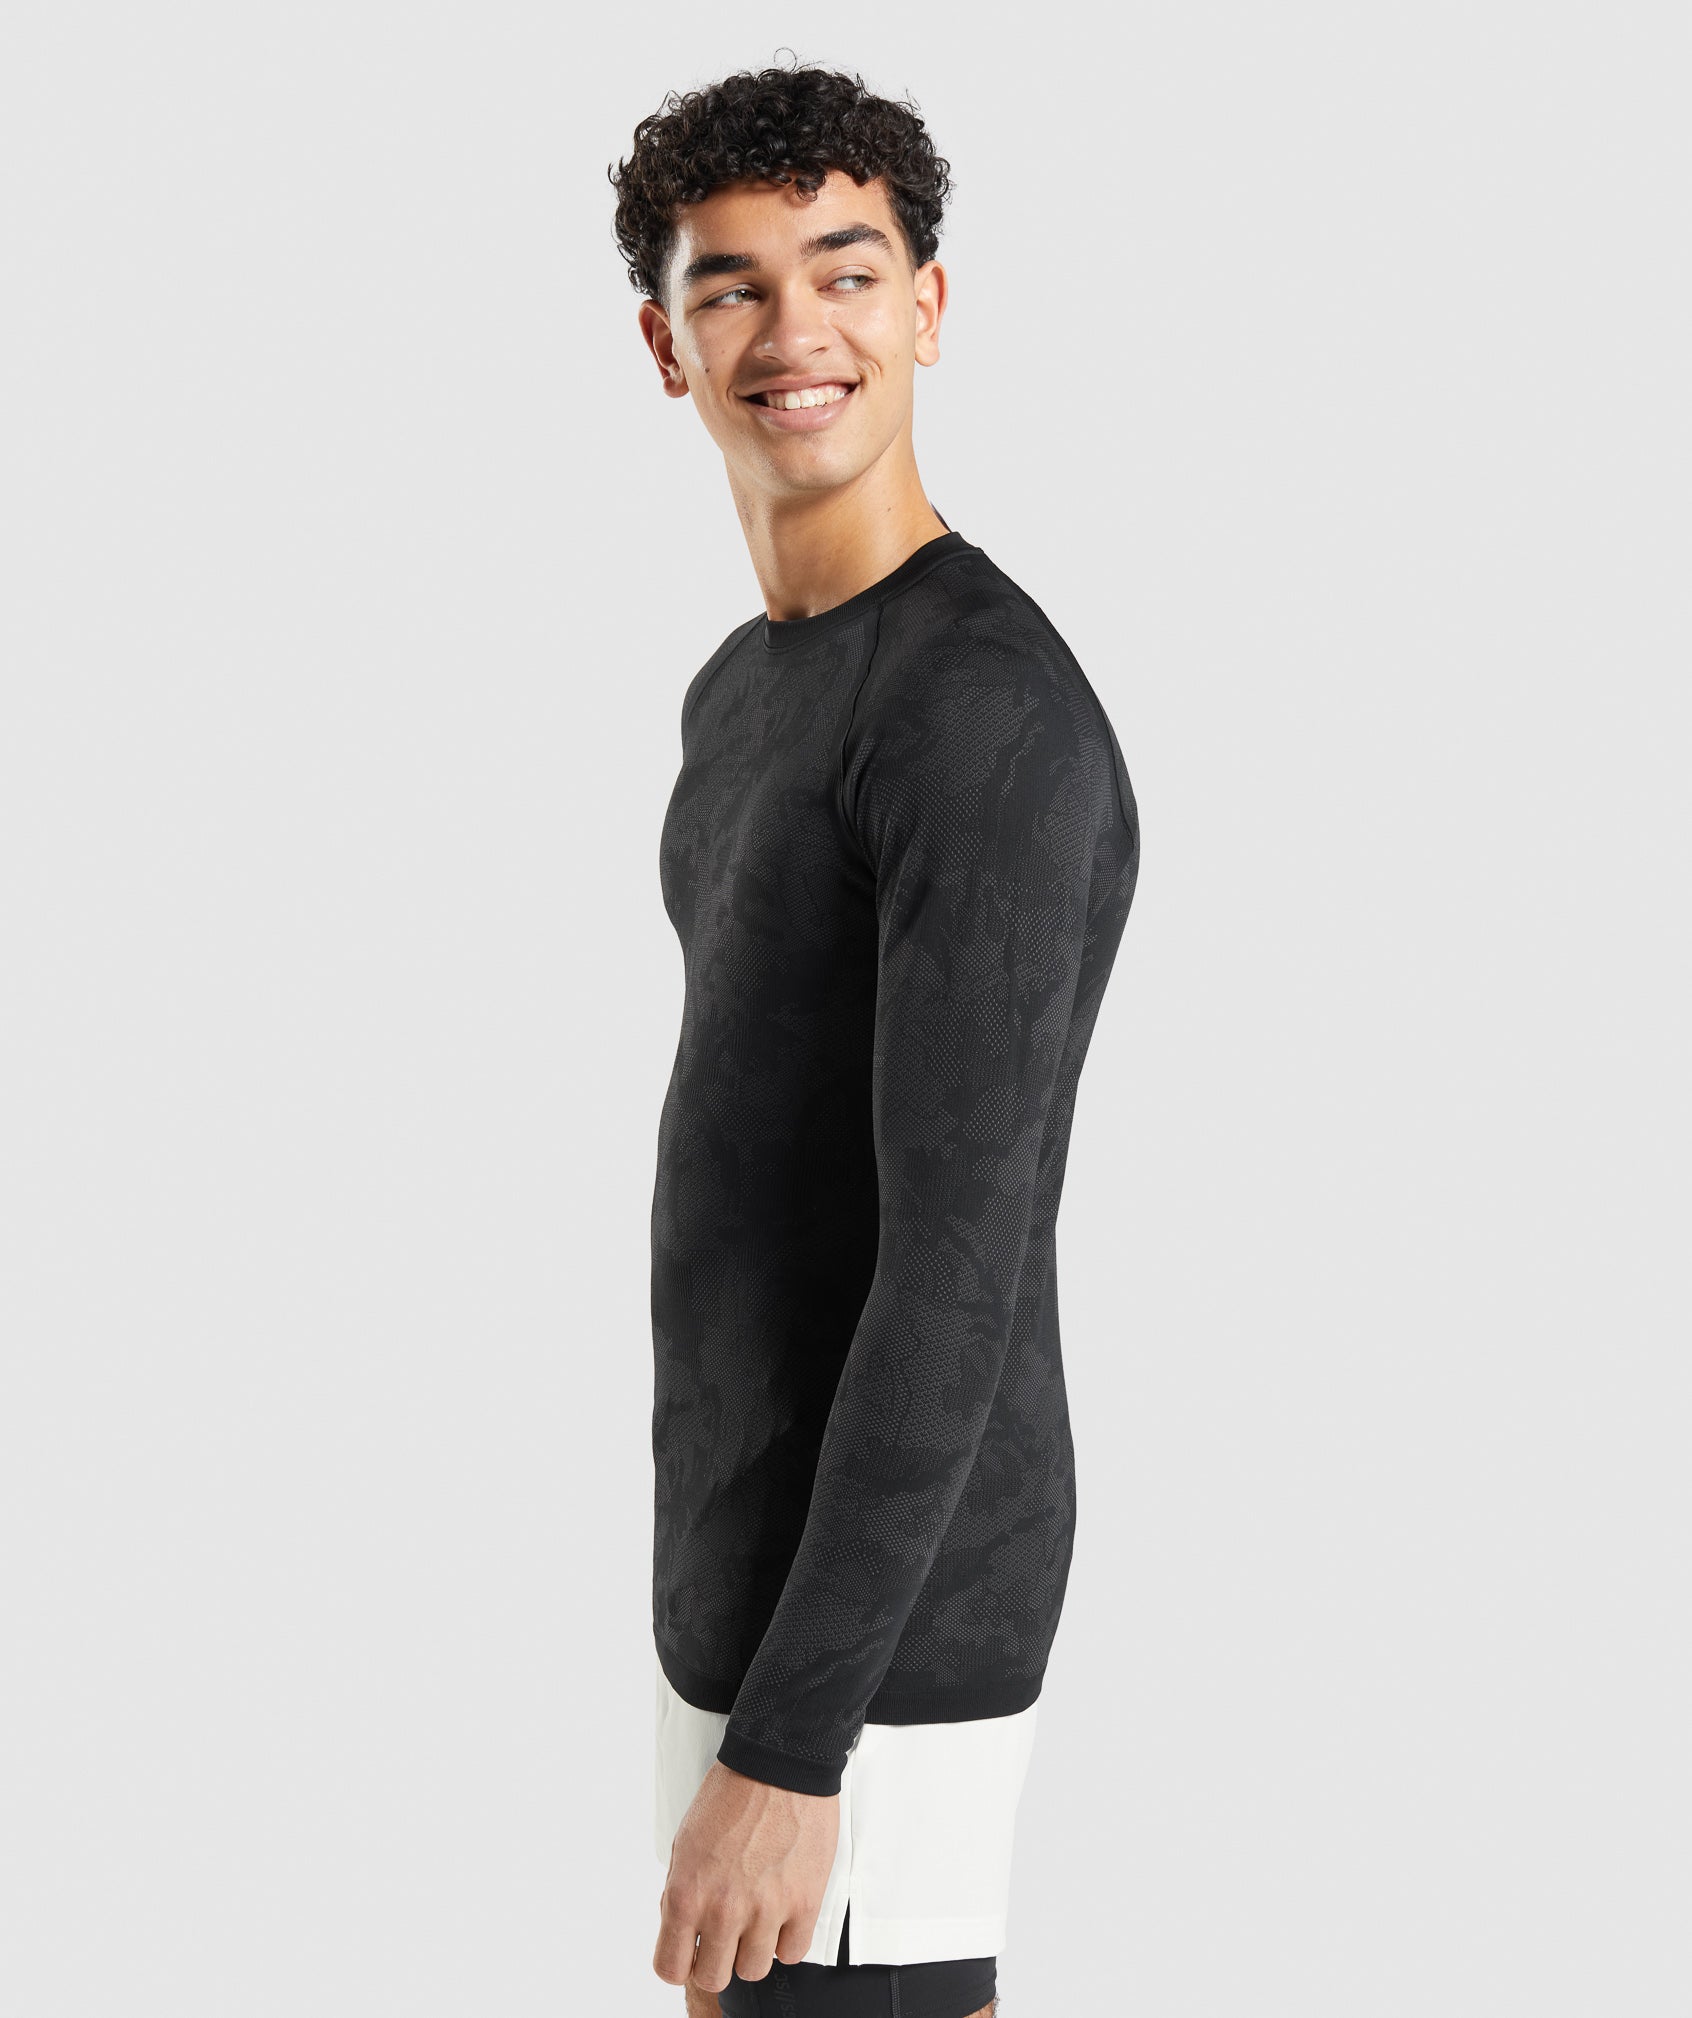 Gymshark//Steve Cook Long Sleeve Seamless T-Shirt in Black/Graphite Grey - view 5